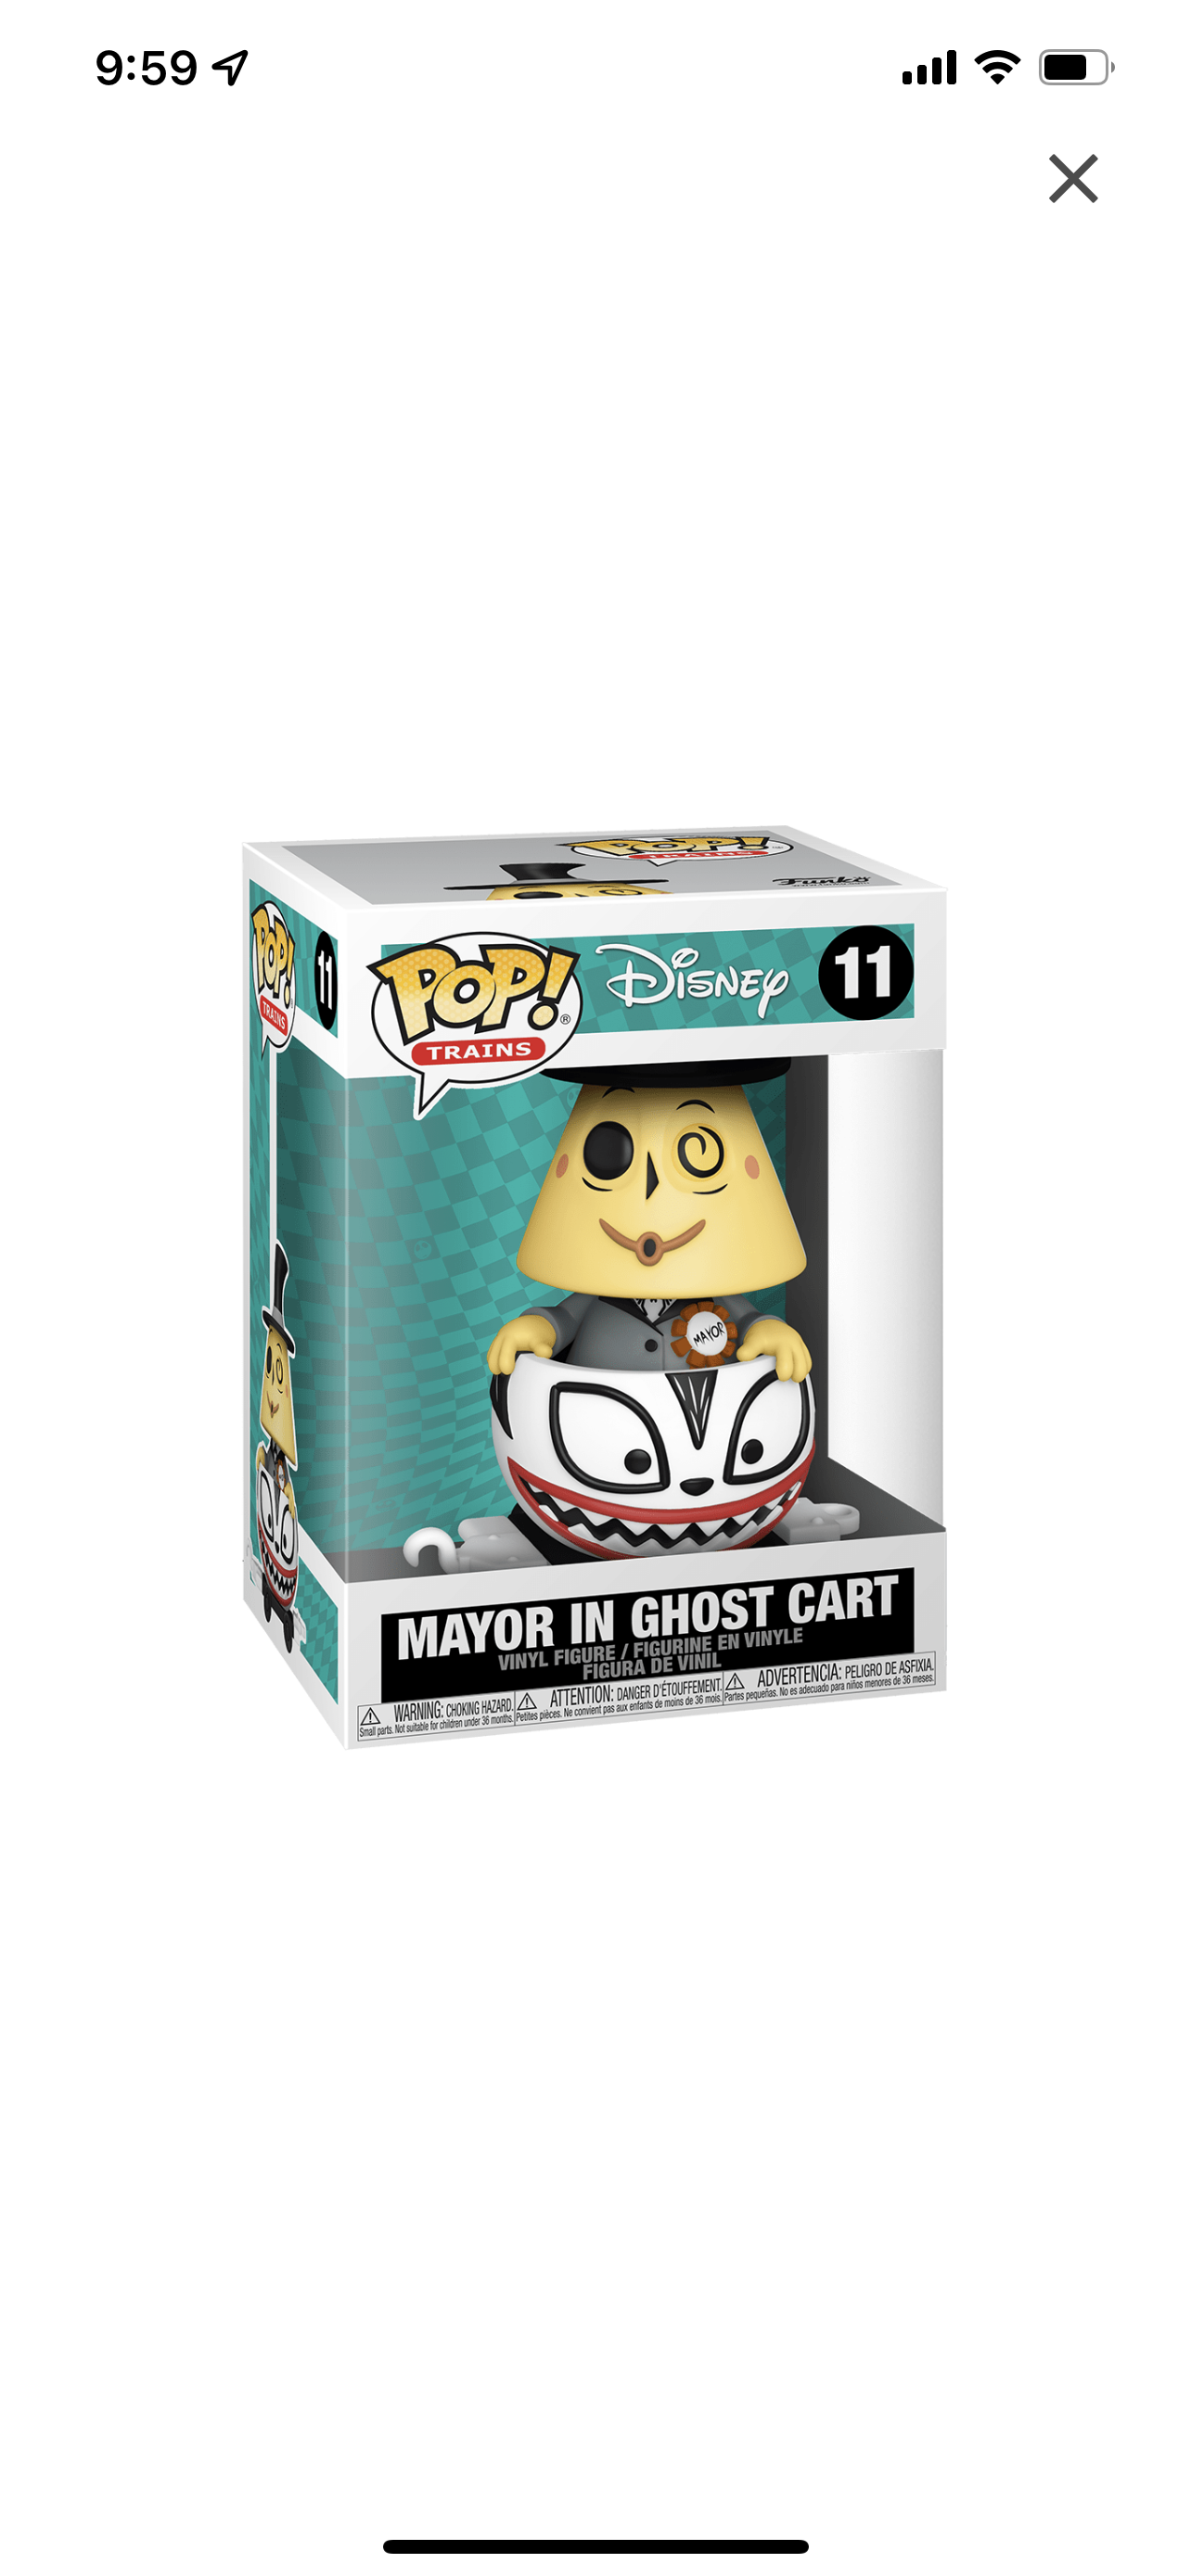 POP! Disney NBC Mayor in Ghost Cart #11